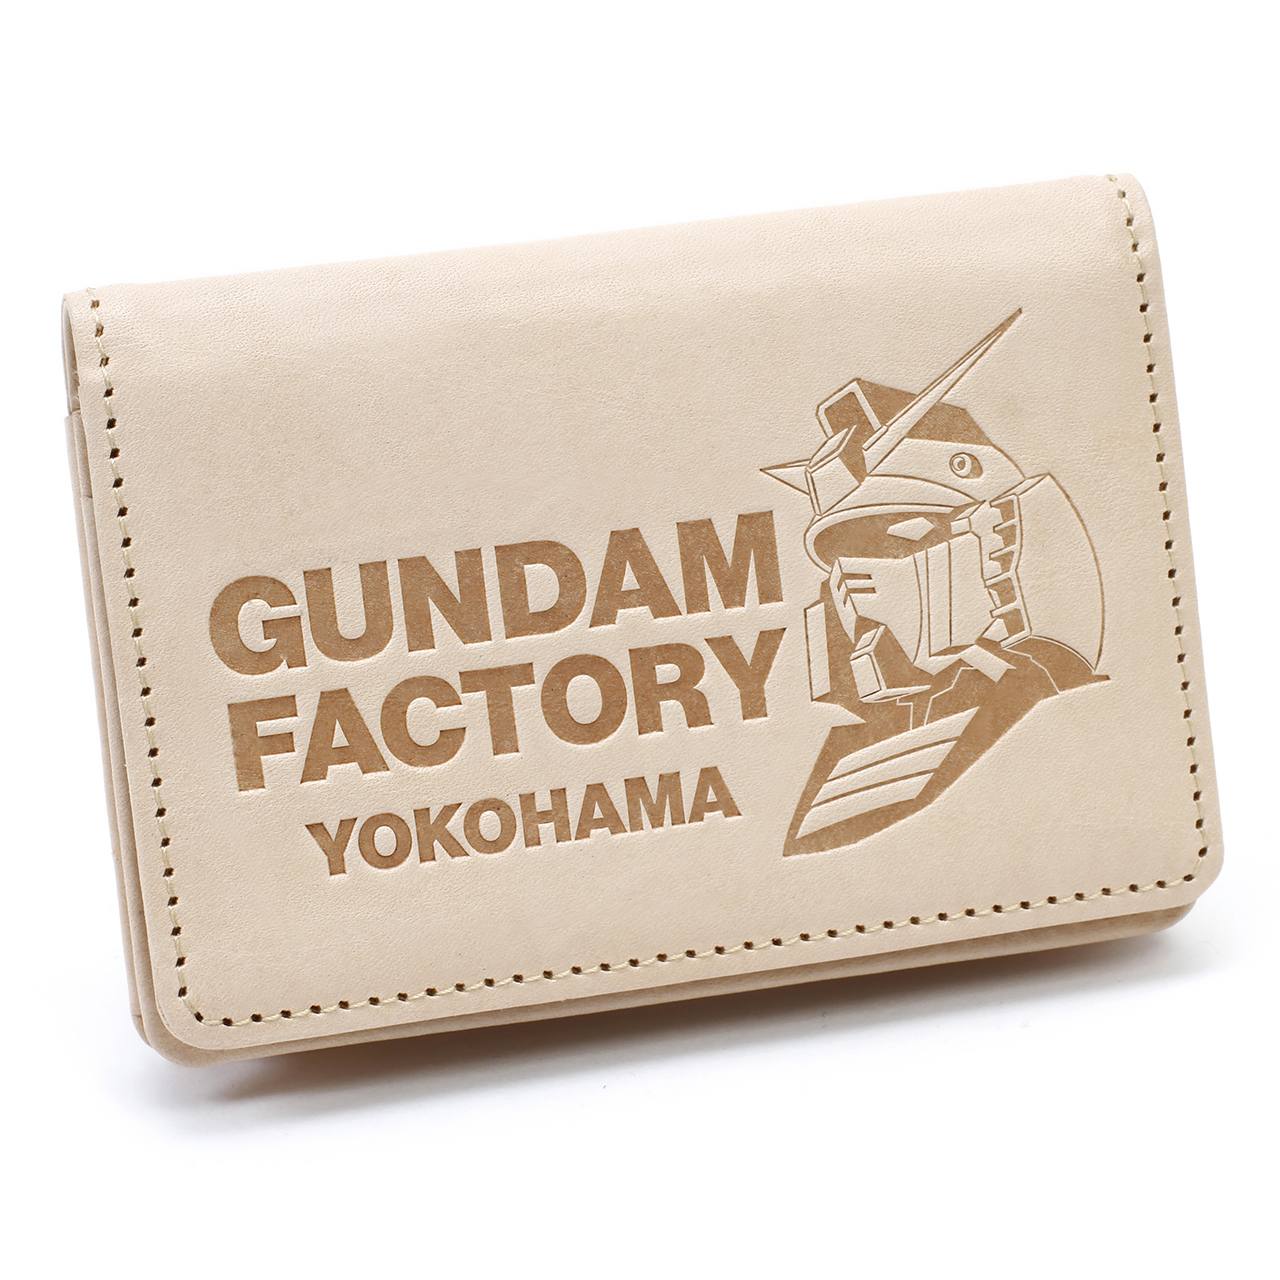 GUNDAM FACTORY YOKOHAMA名刺入れ | GUNDAM FACTORY YOKOHAMA